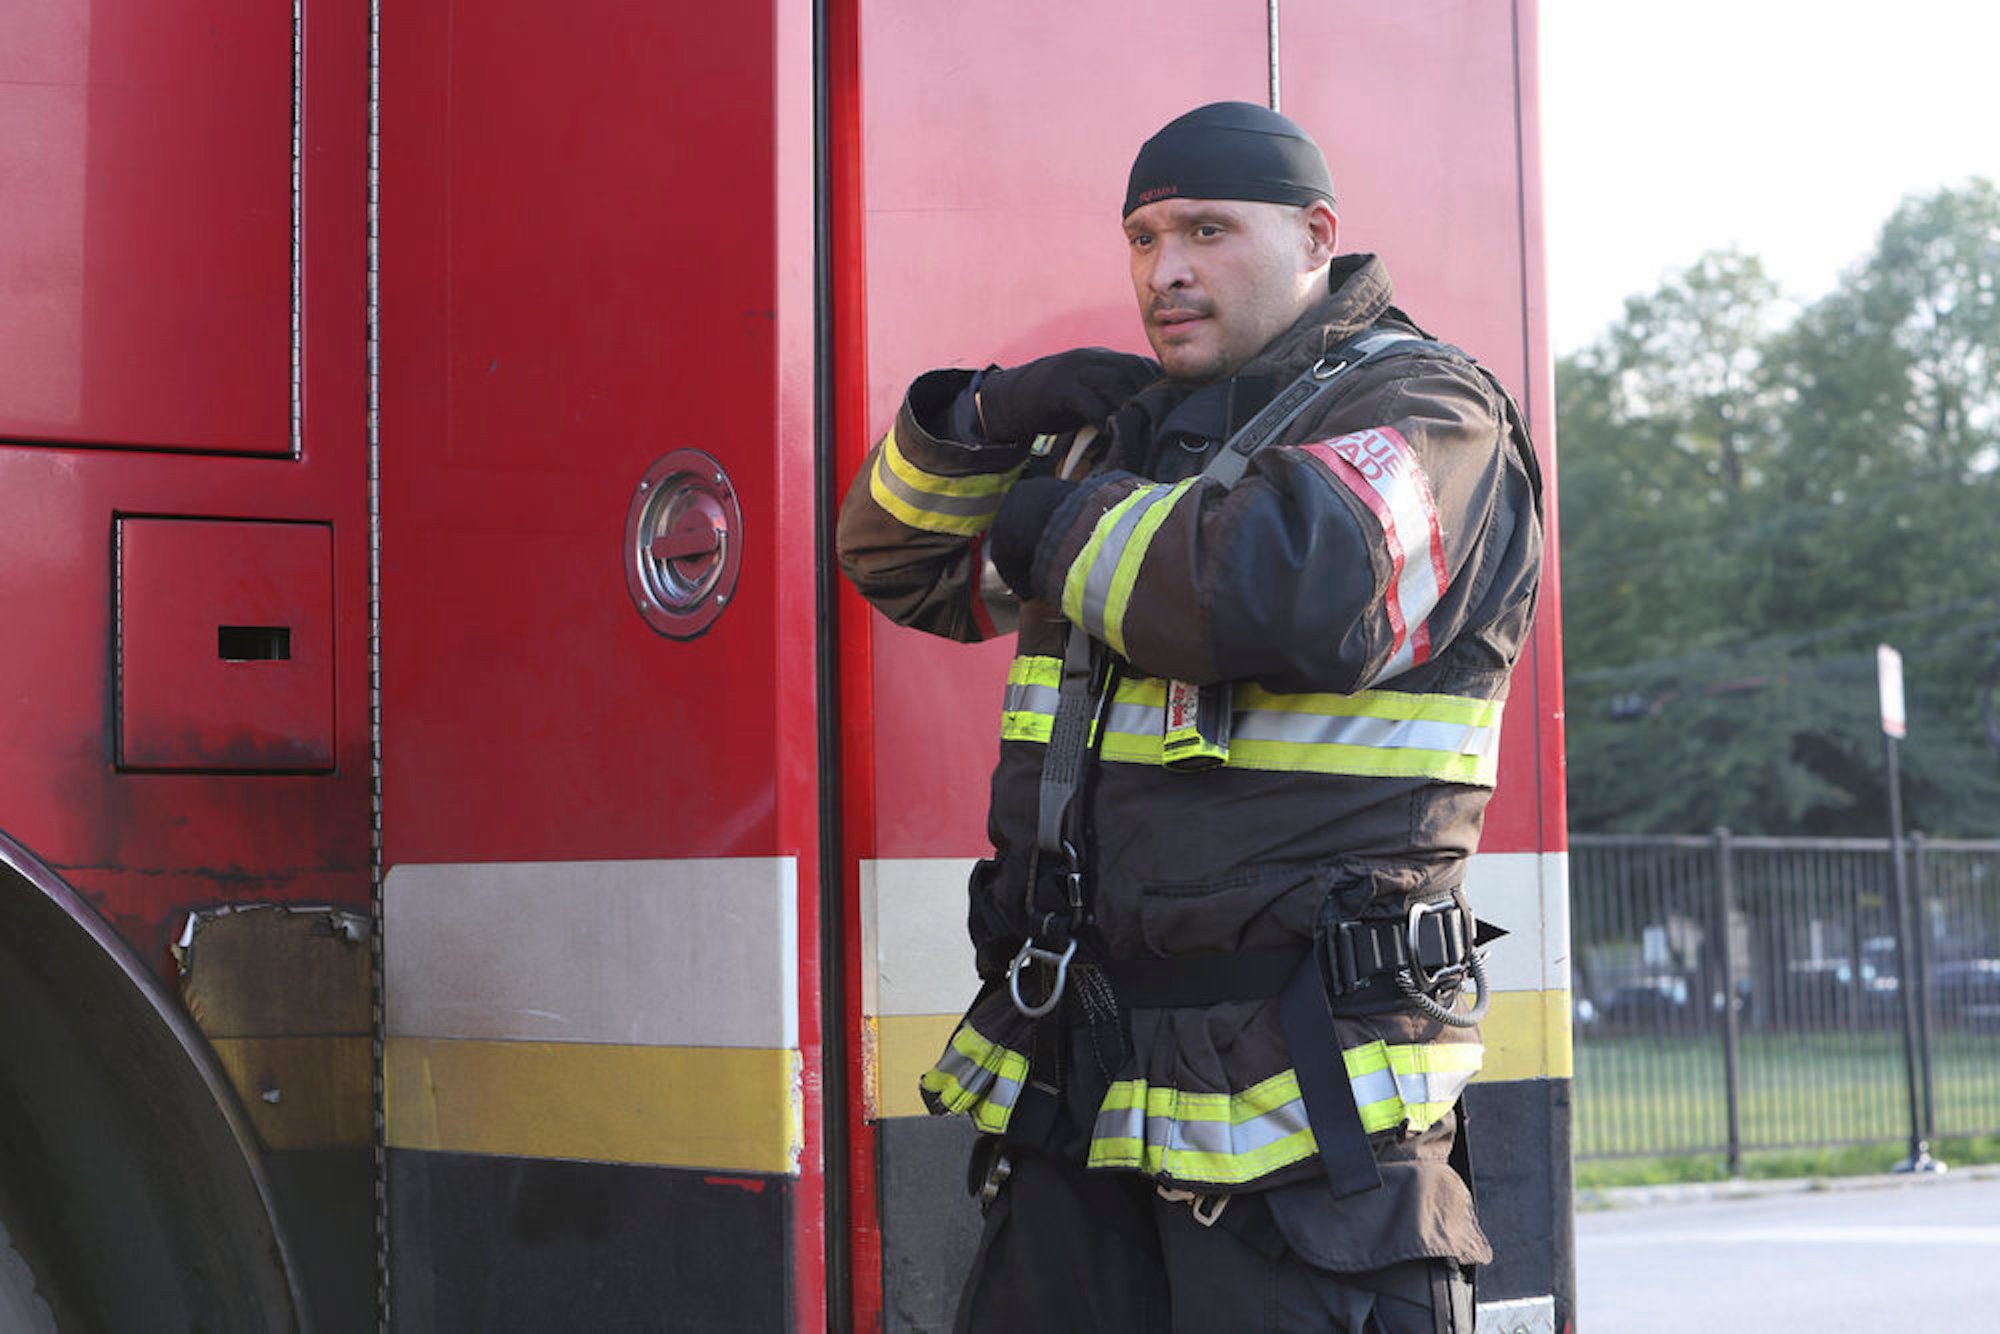 Joe Minoso as Joe Cruz in his firefighter uniform as part of the 'Chicago Fire' Season 10 cast